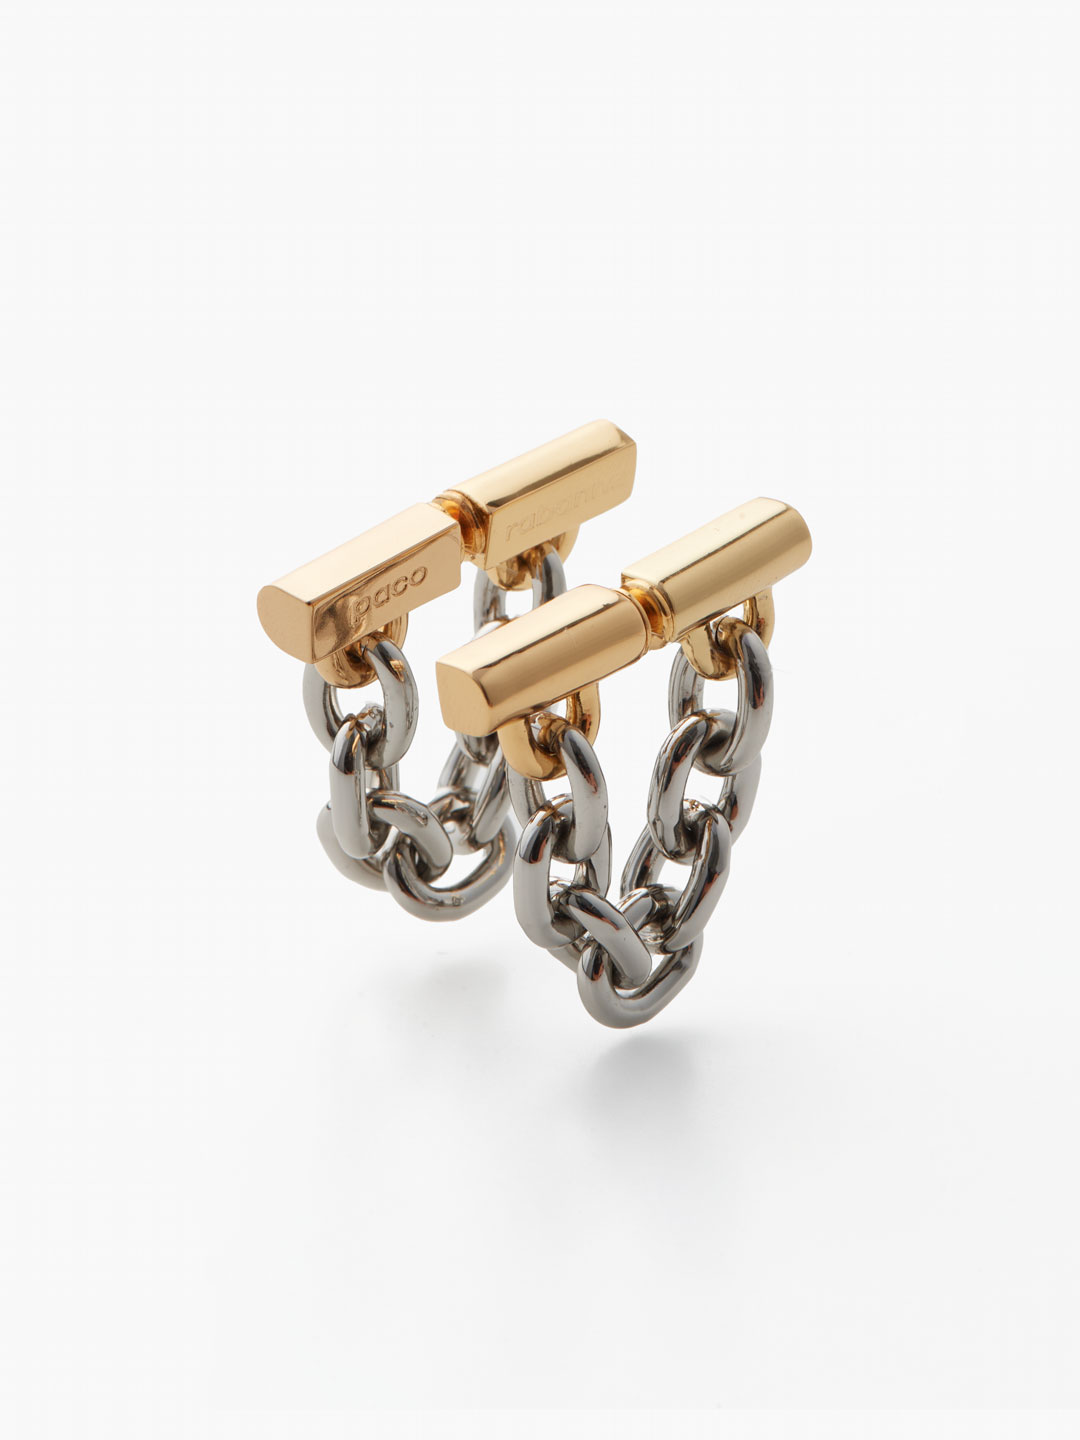 XL Link Chain Pierced Earring - Silver/Yellow Gold